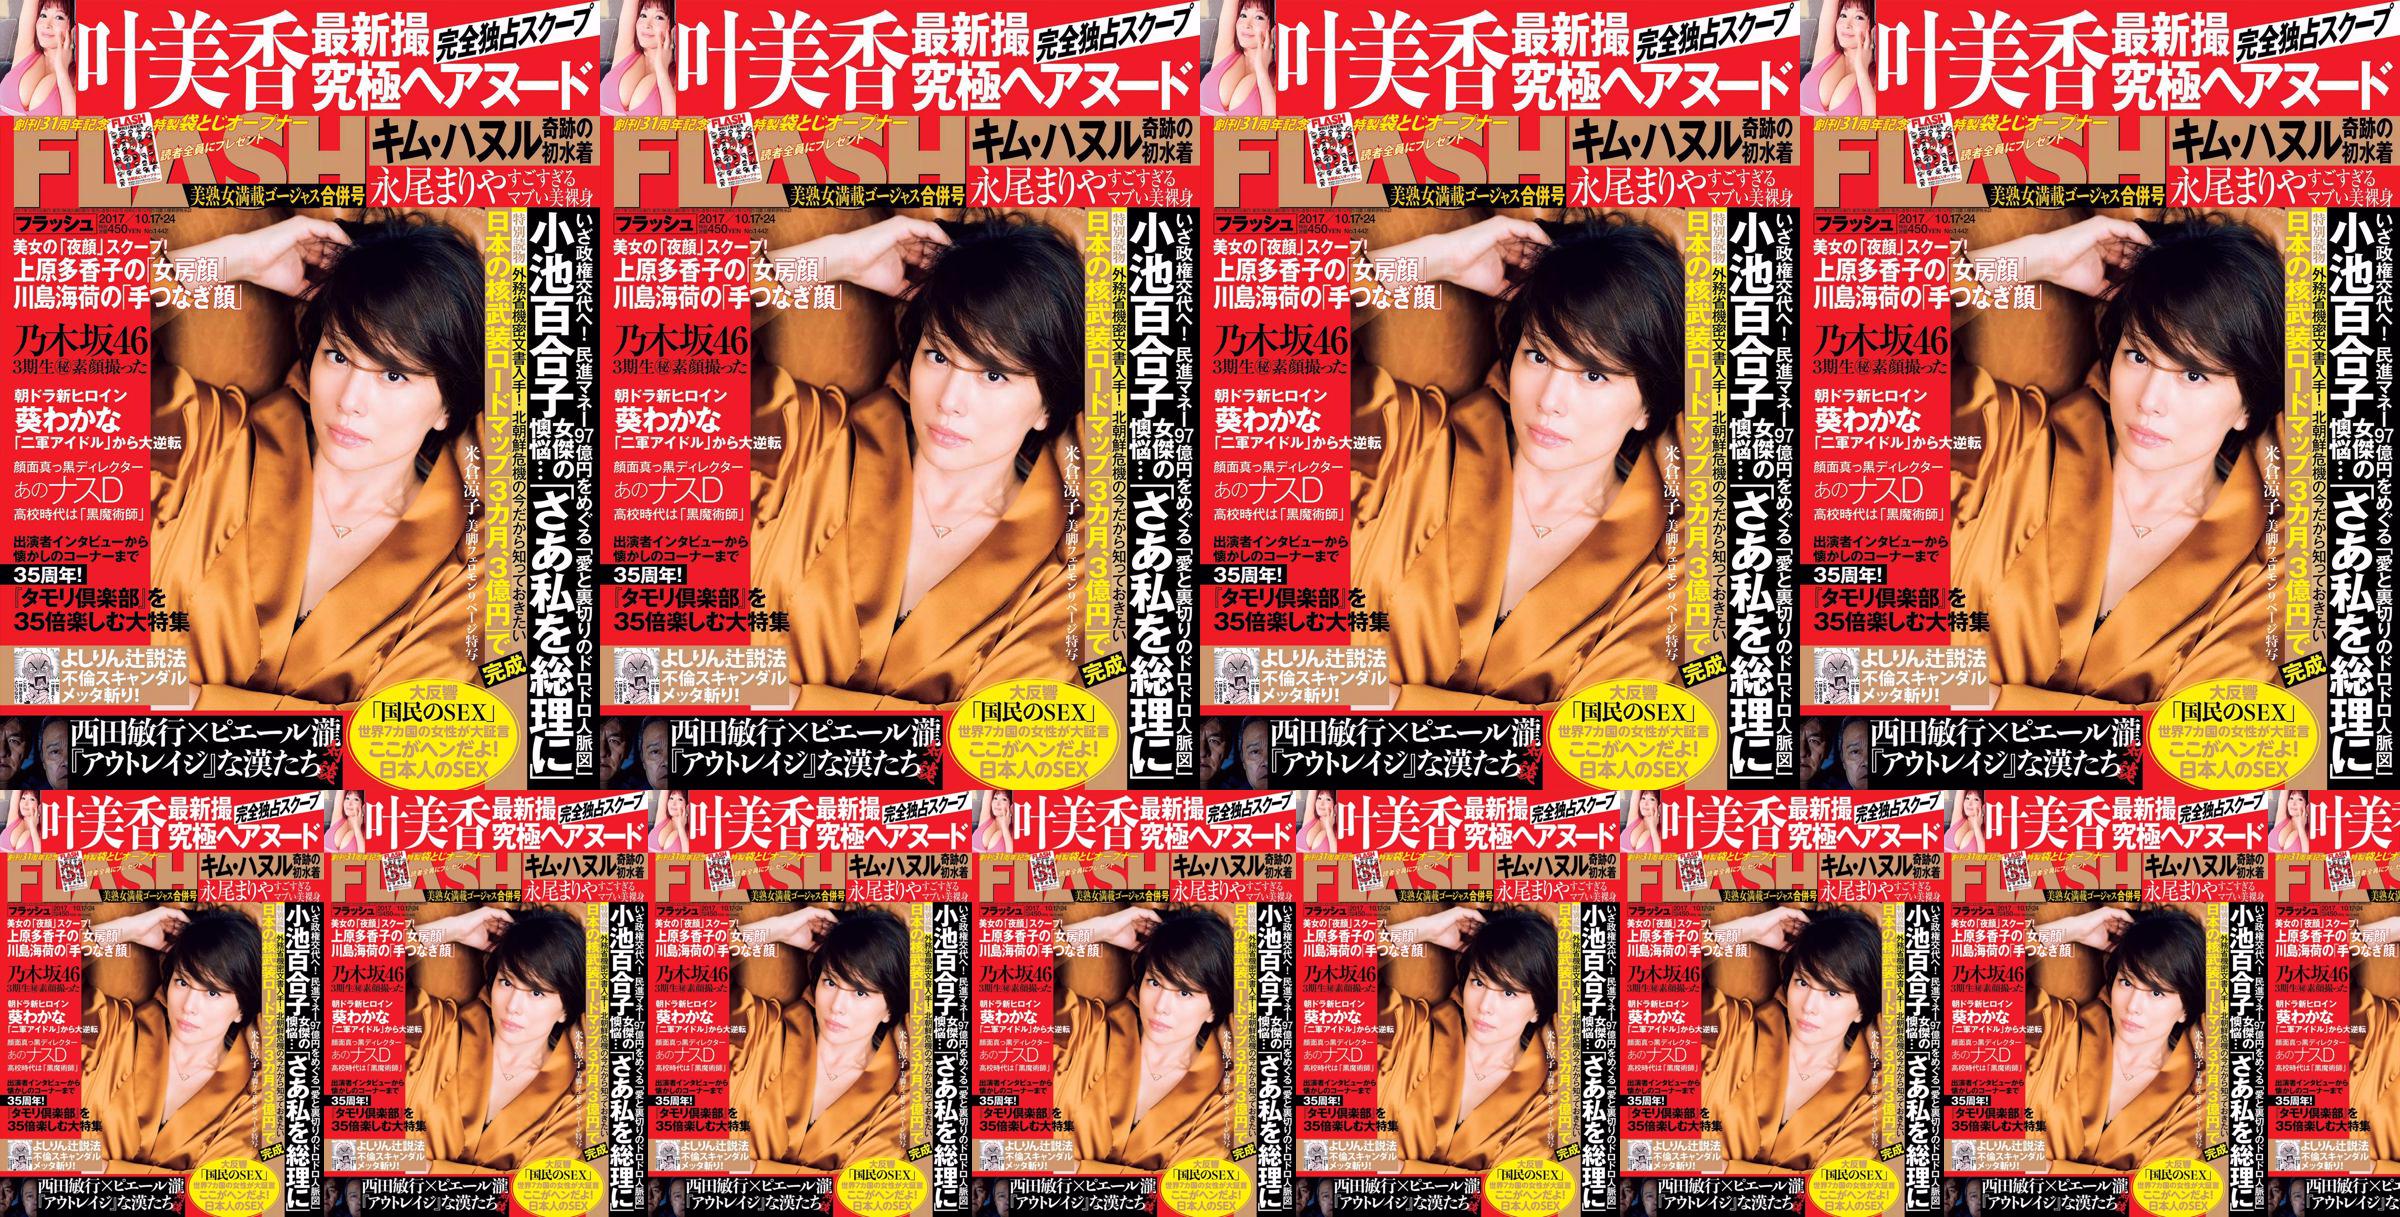 [FLASH] Yonekura Ryoko Ye Meixiang Tachibana Flower Rin Nagao Rika 2017.10.17-24 นิตยสารภาพถ่าย No.200a38 หน้า 1